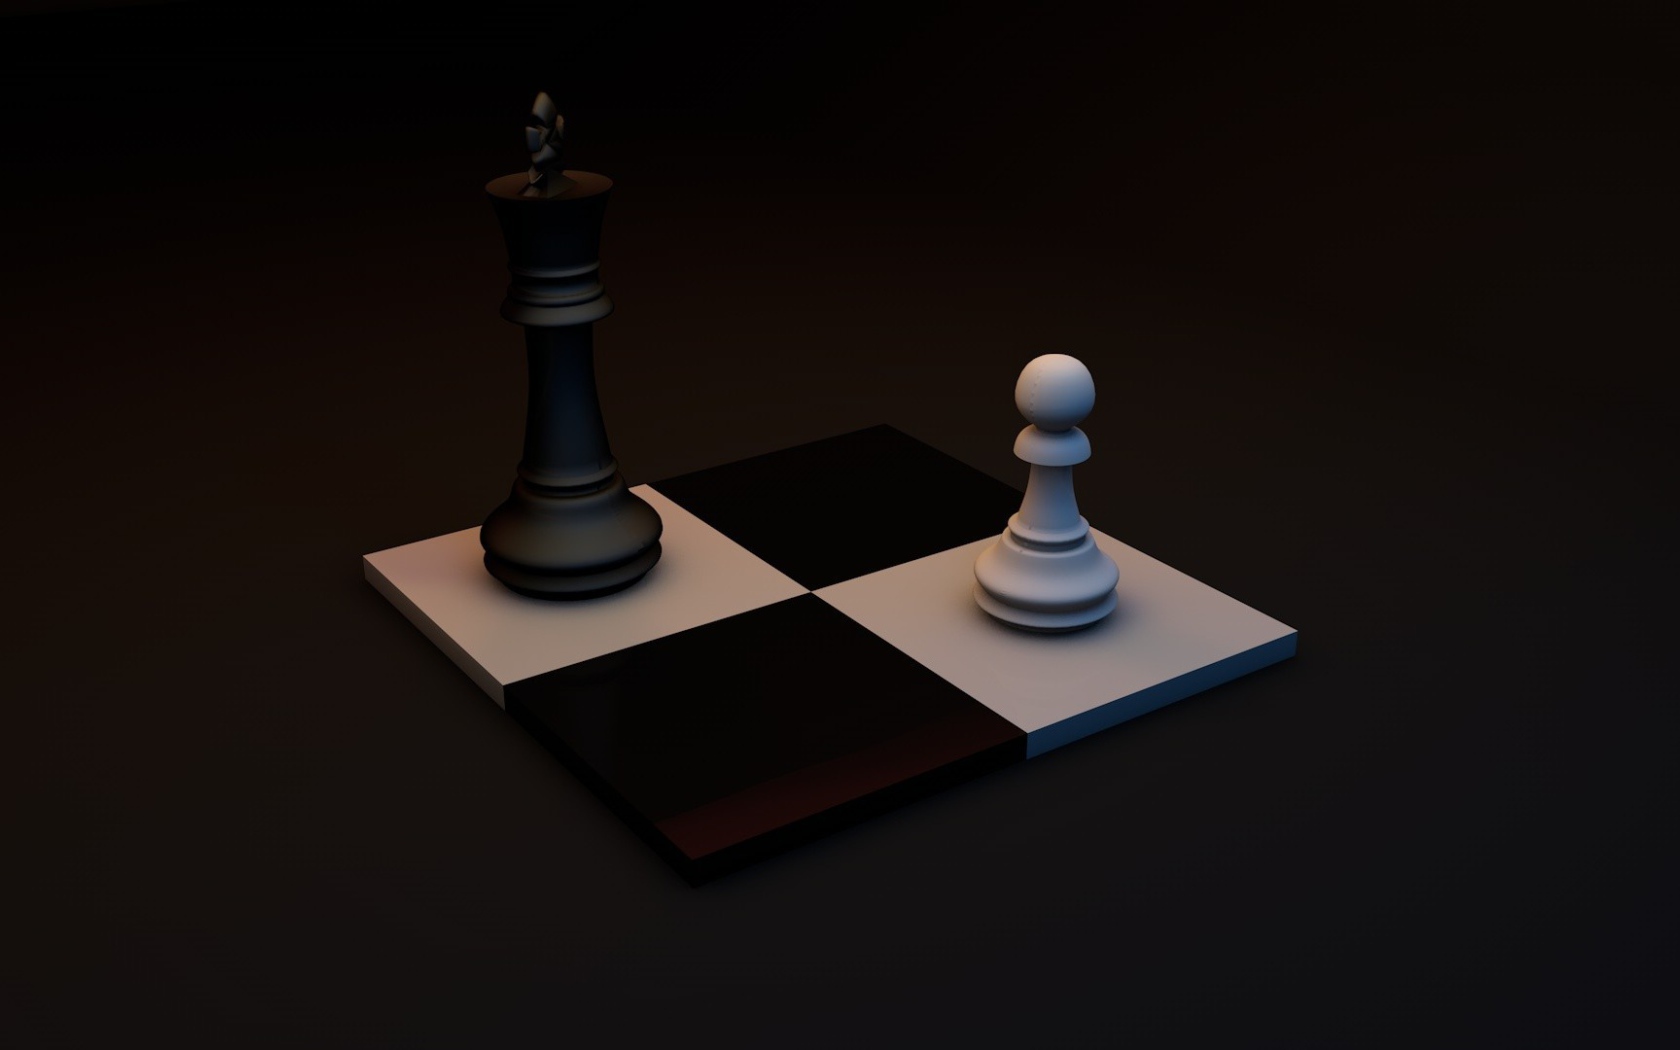 Mini chess